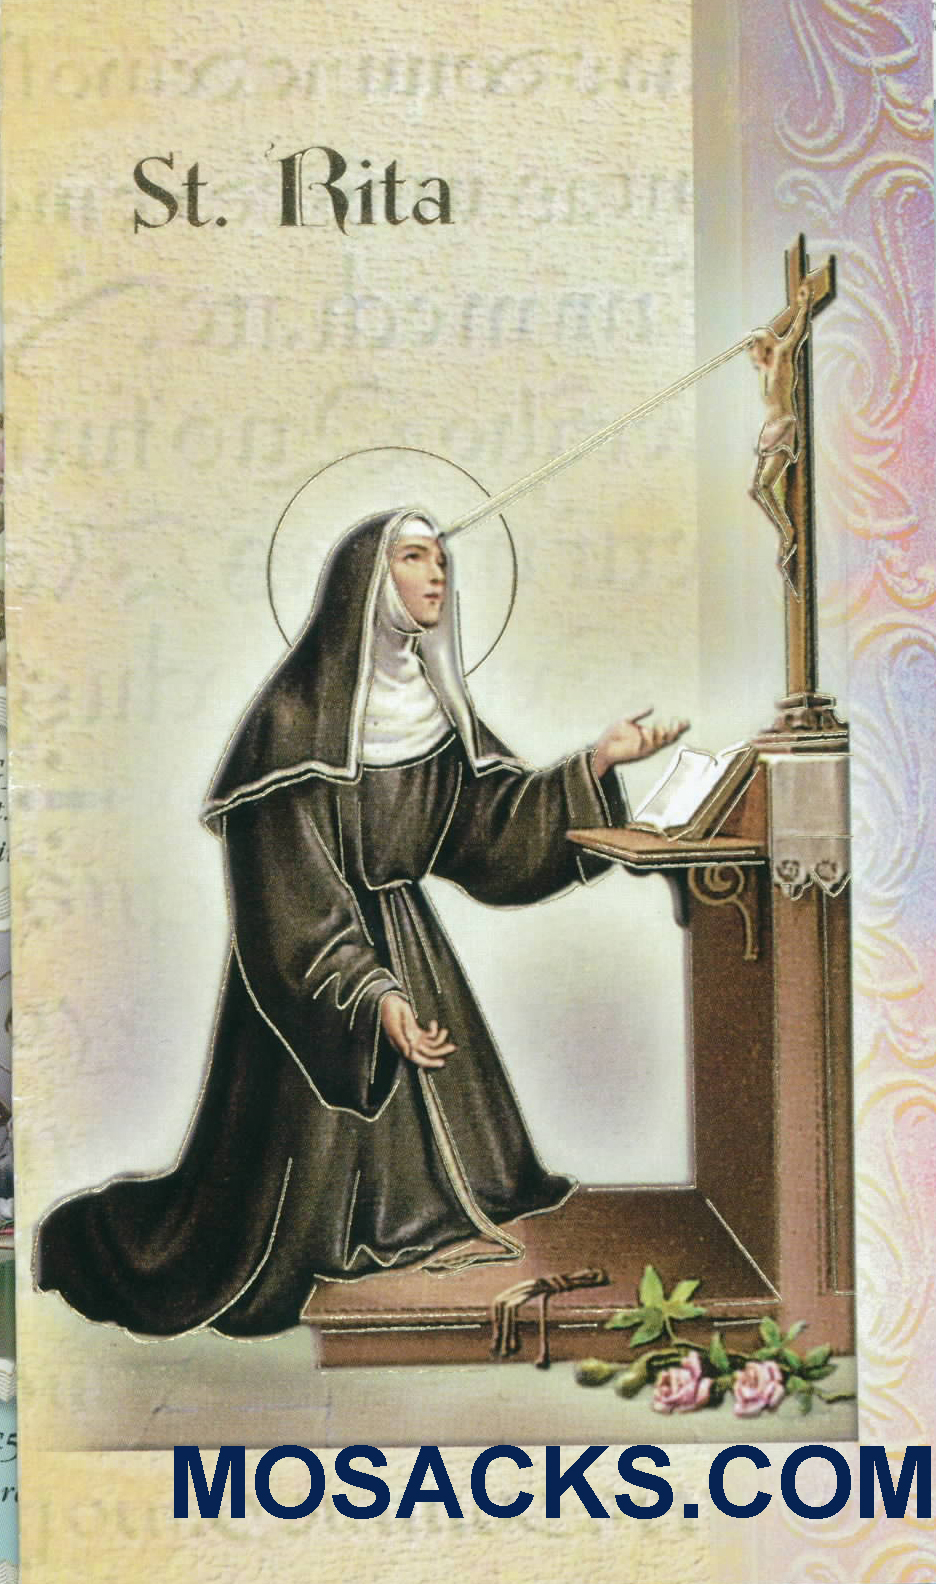 St. Rita Laminated Bi-fold HolySt. Rita Laminated Bi-fold Holy Card, F5-532St. Rita Laminated Bi-fold Holy Card, F5-532St. Rita Laminated Bi-fold Holy Card, F5-532